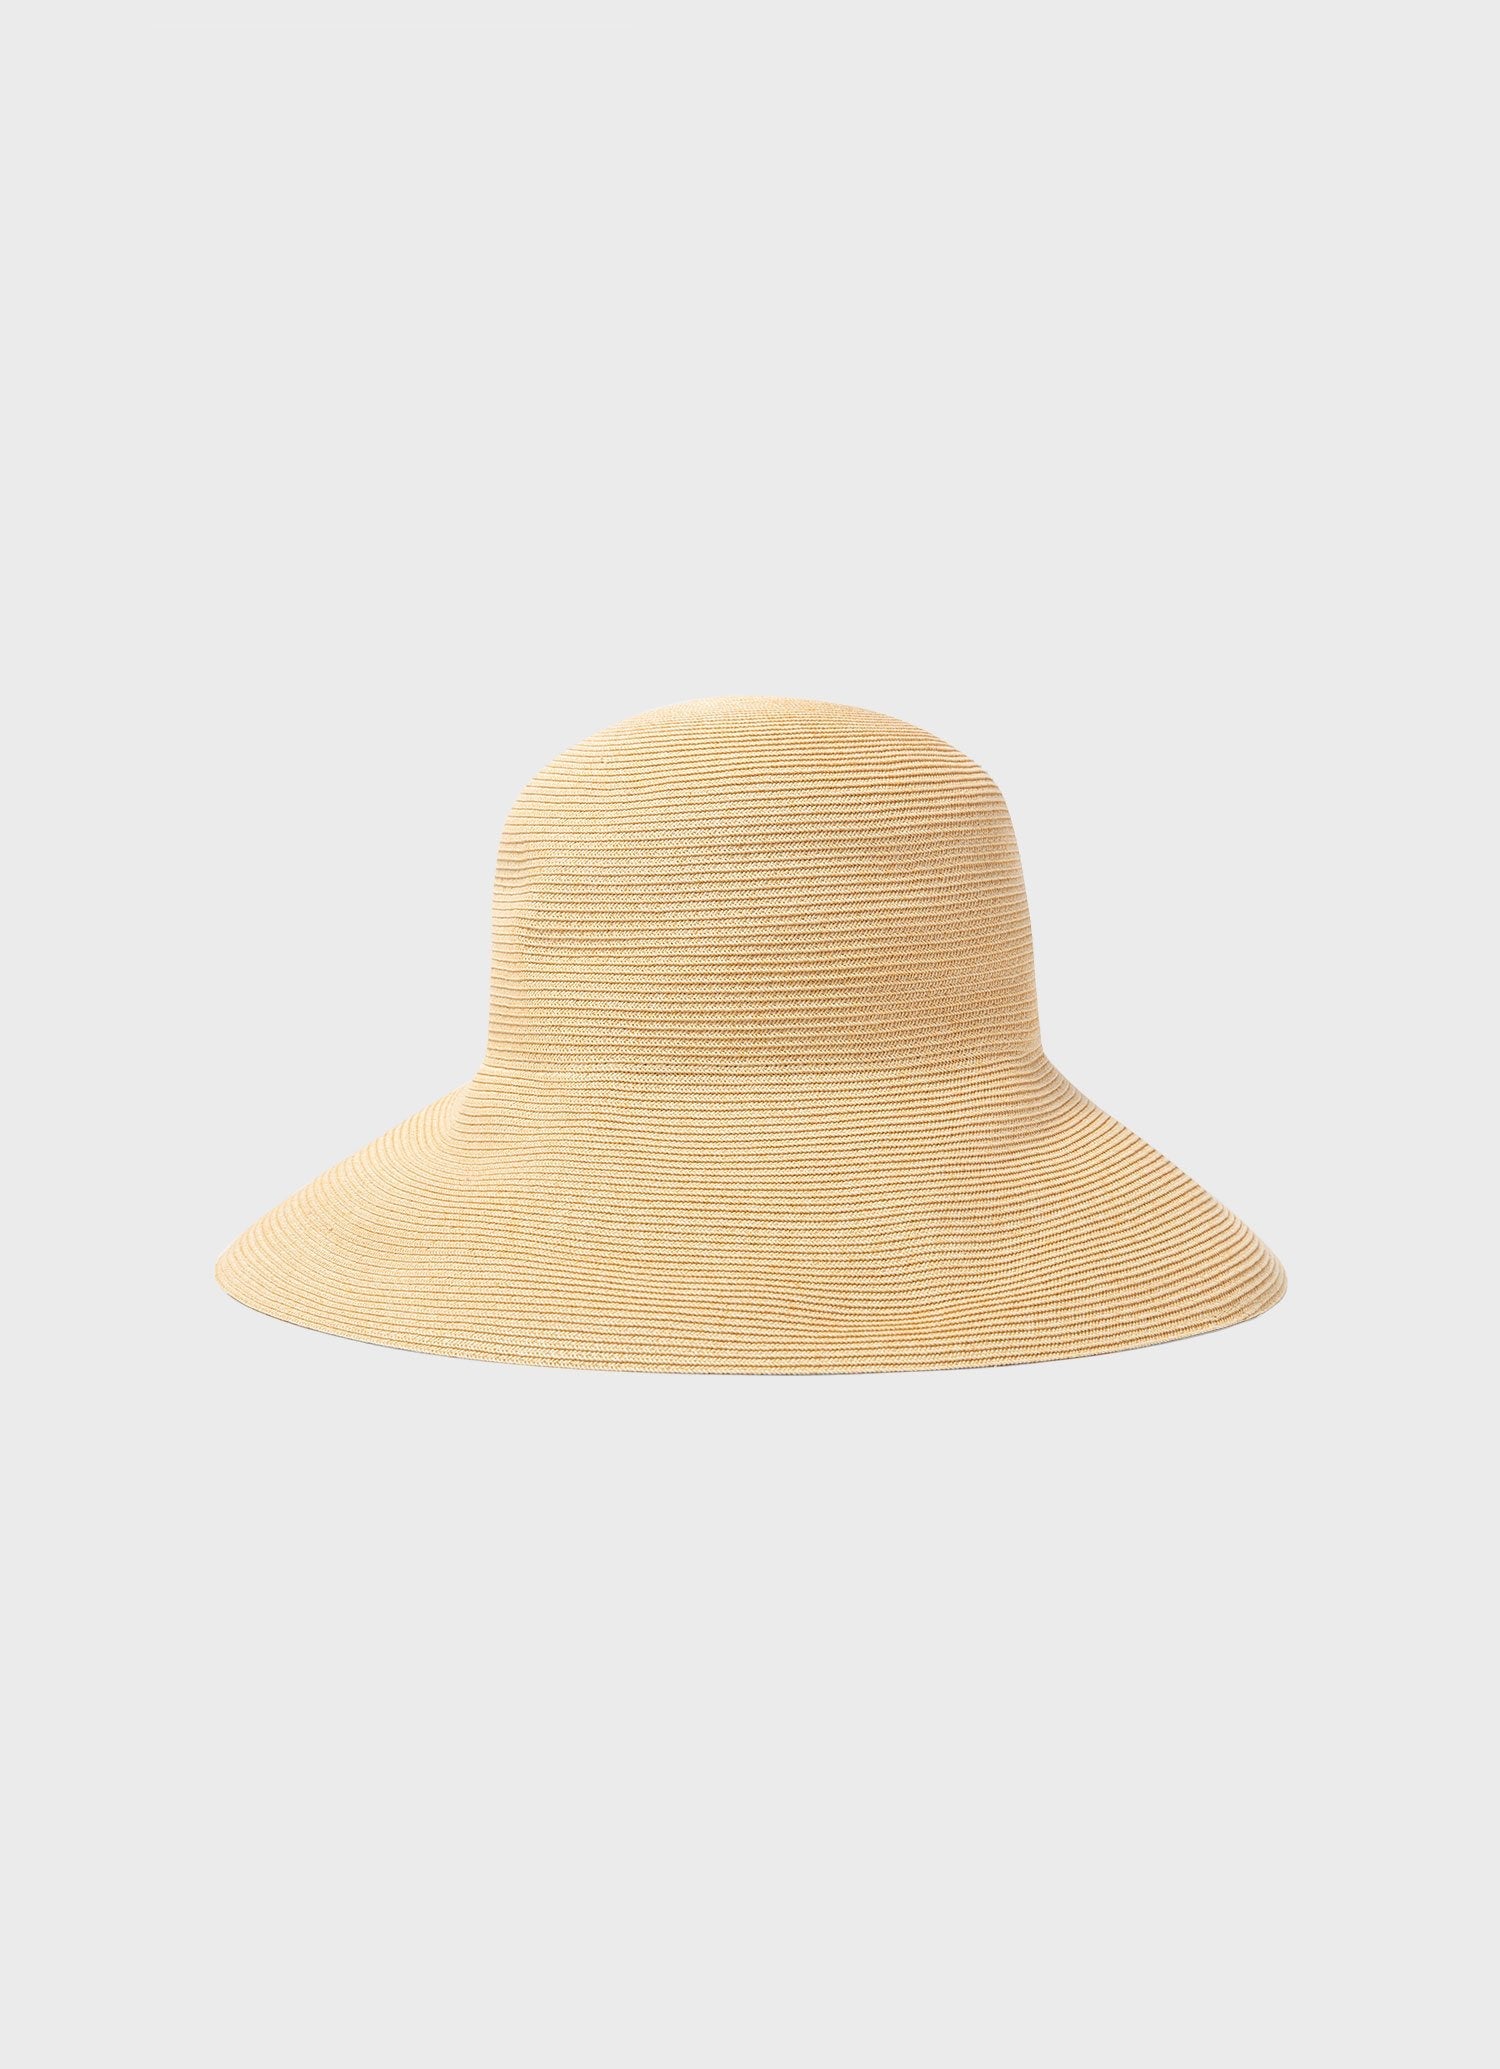 Women's Kijima Takayuki Paper Hat in Natural | Sunspel